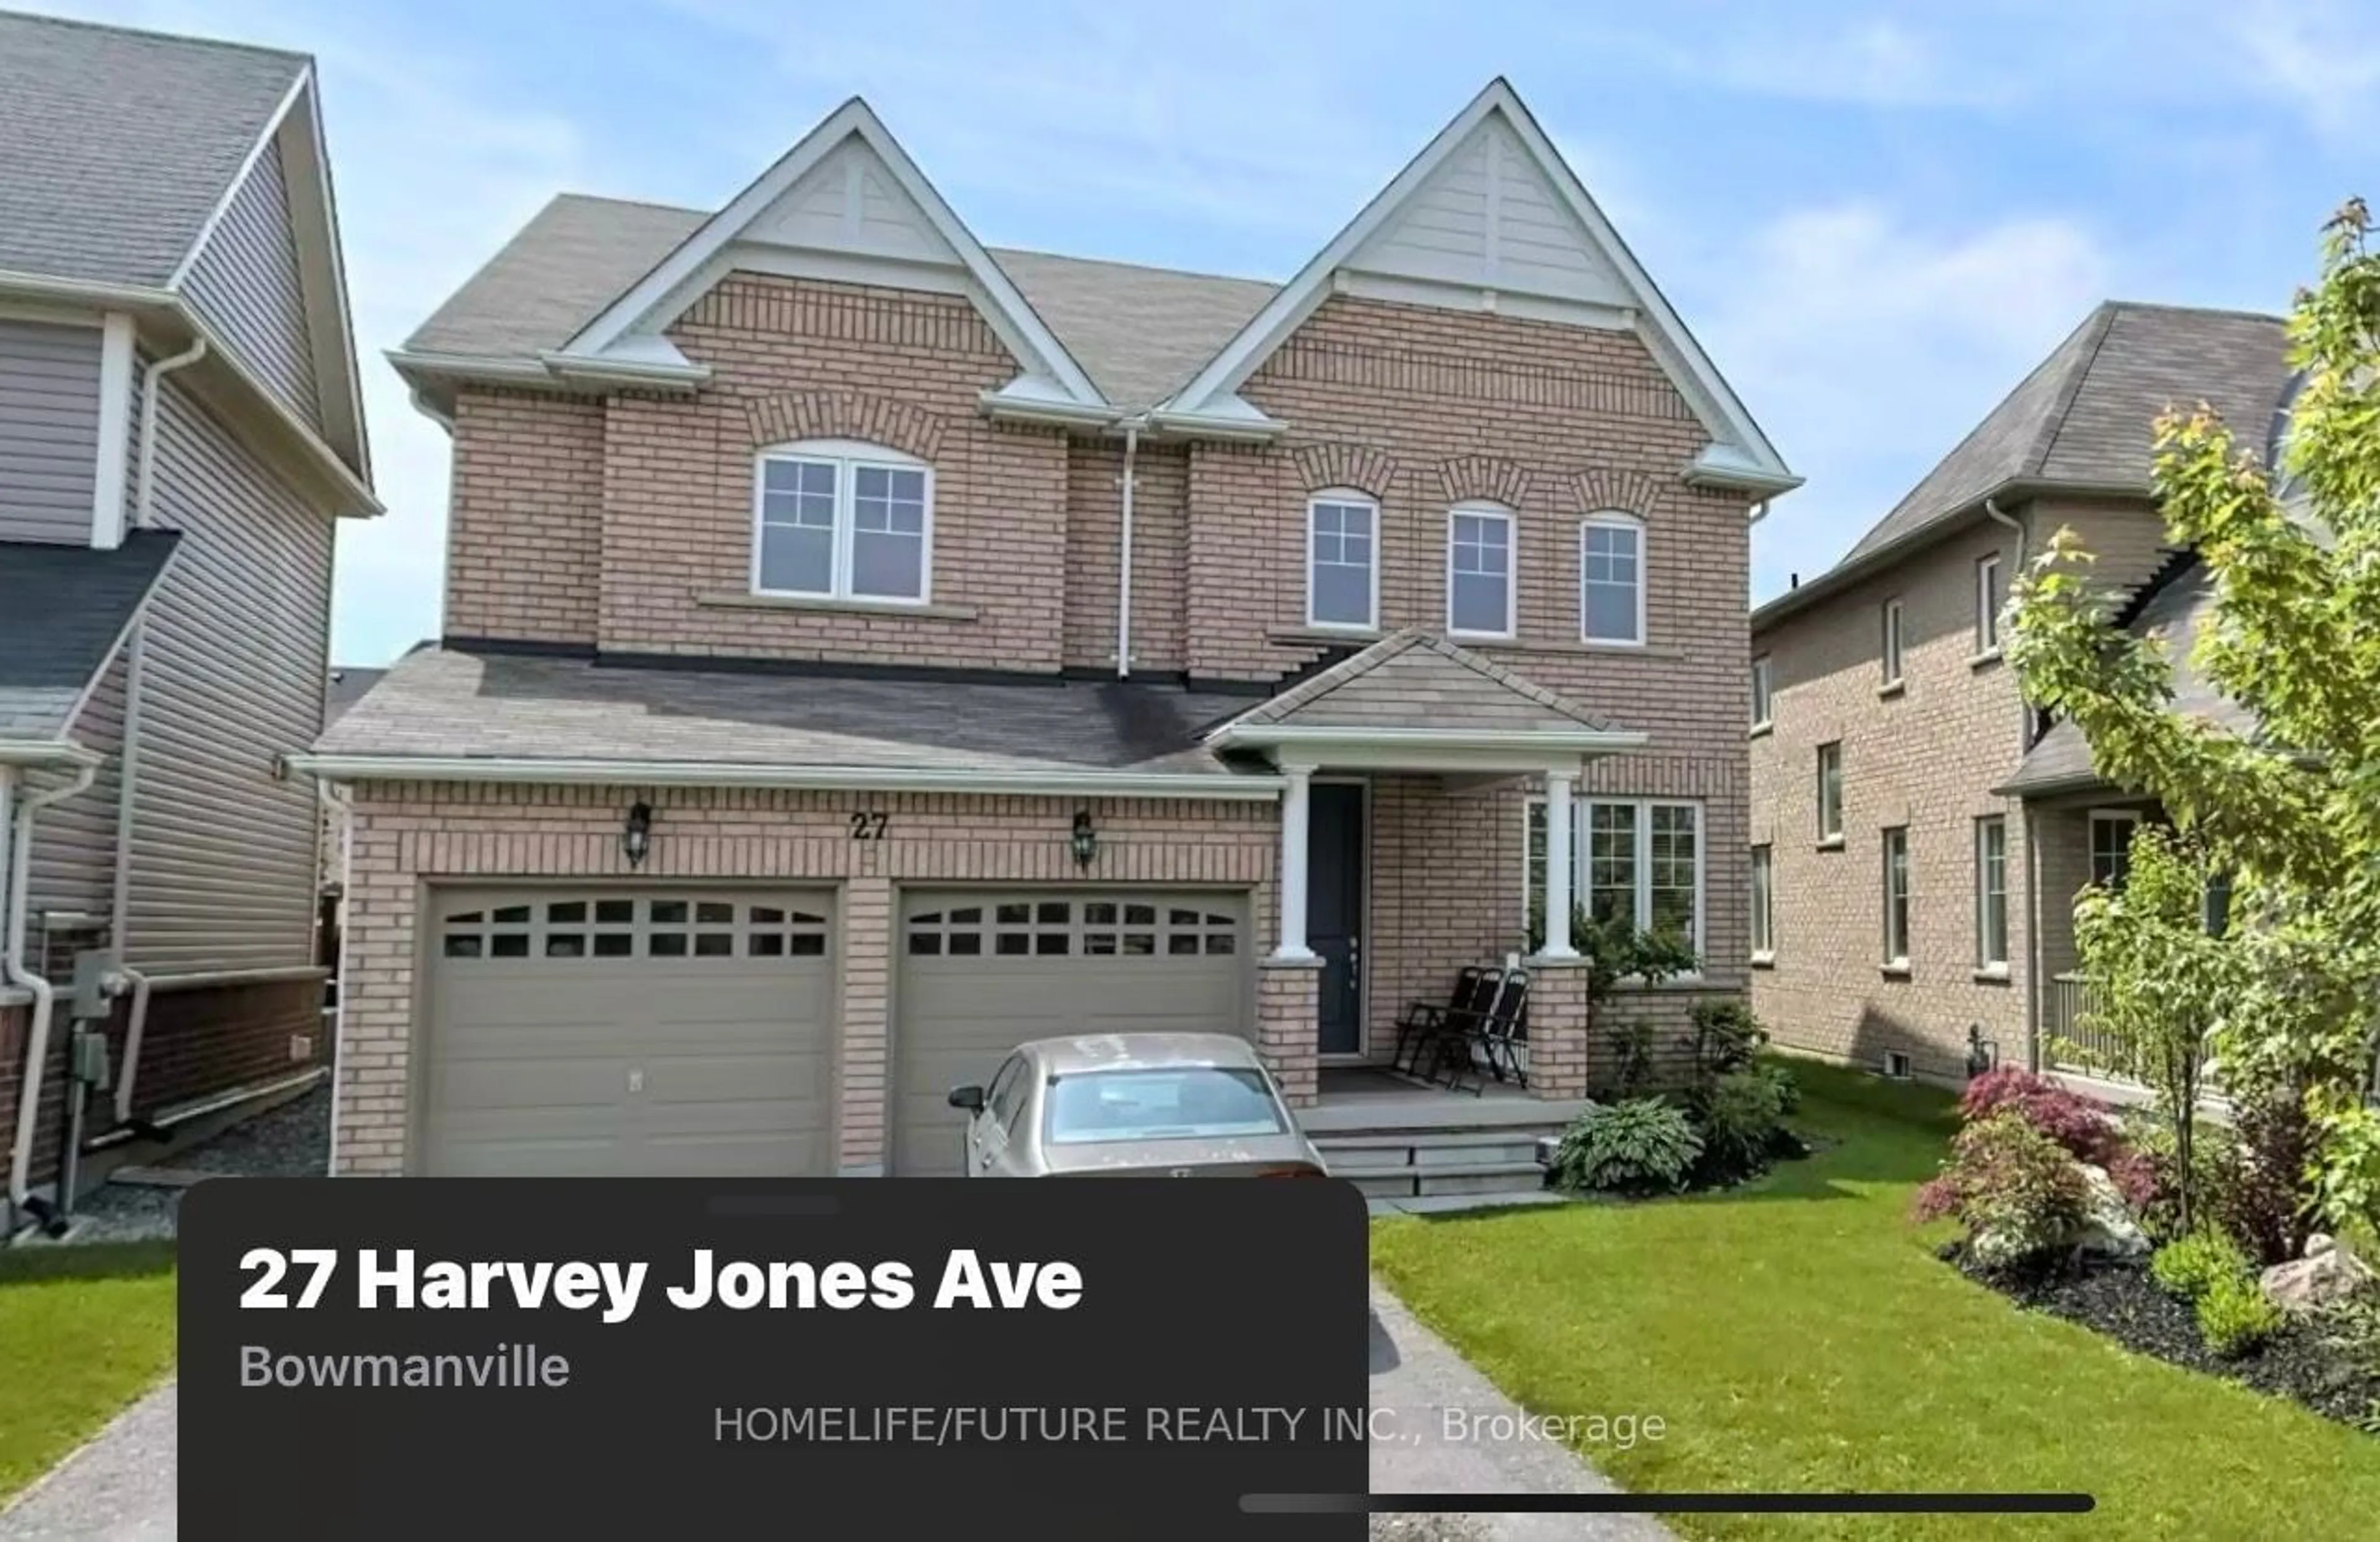 Home with vinyl exterior material for 27 Harvey Jones Ave, Clarington Ontario L1C 3K7